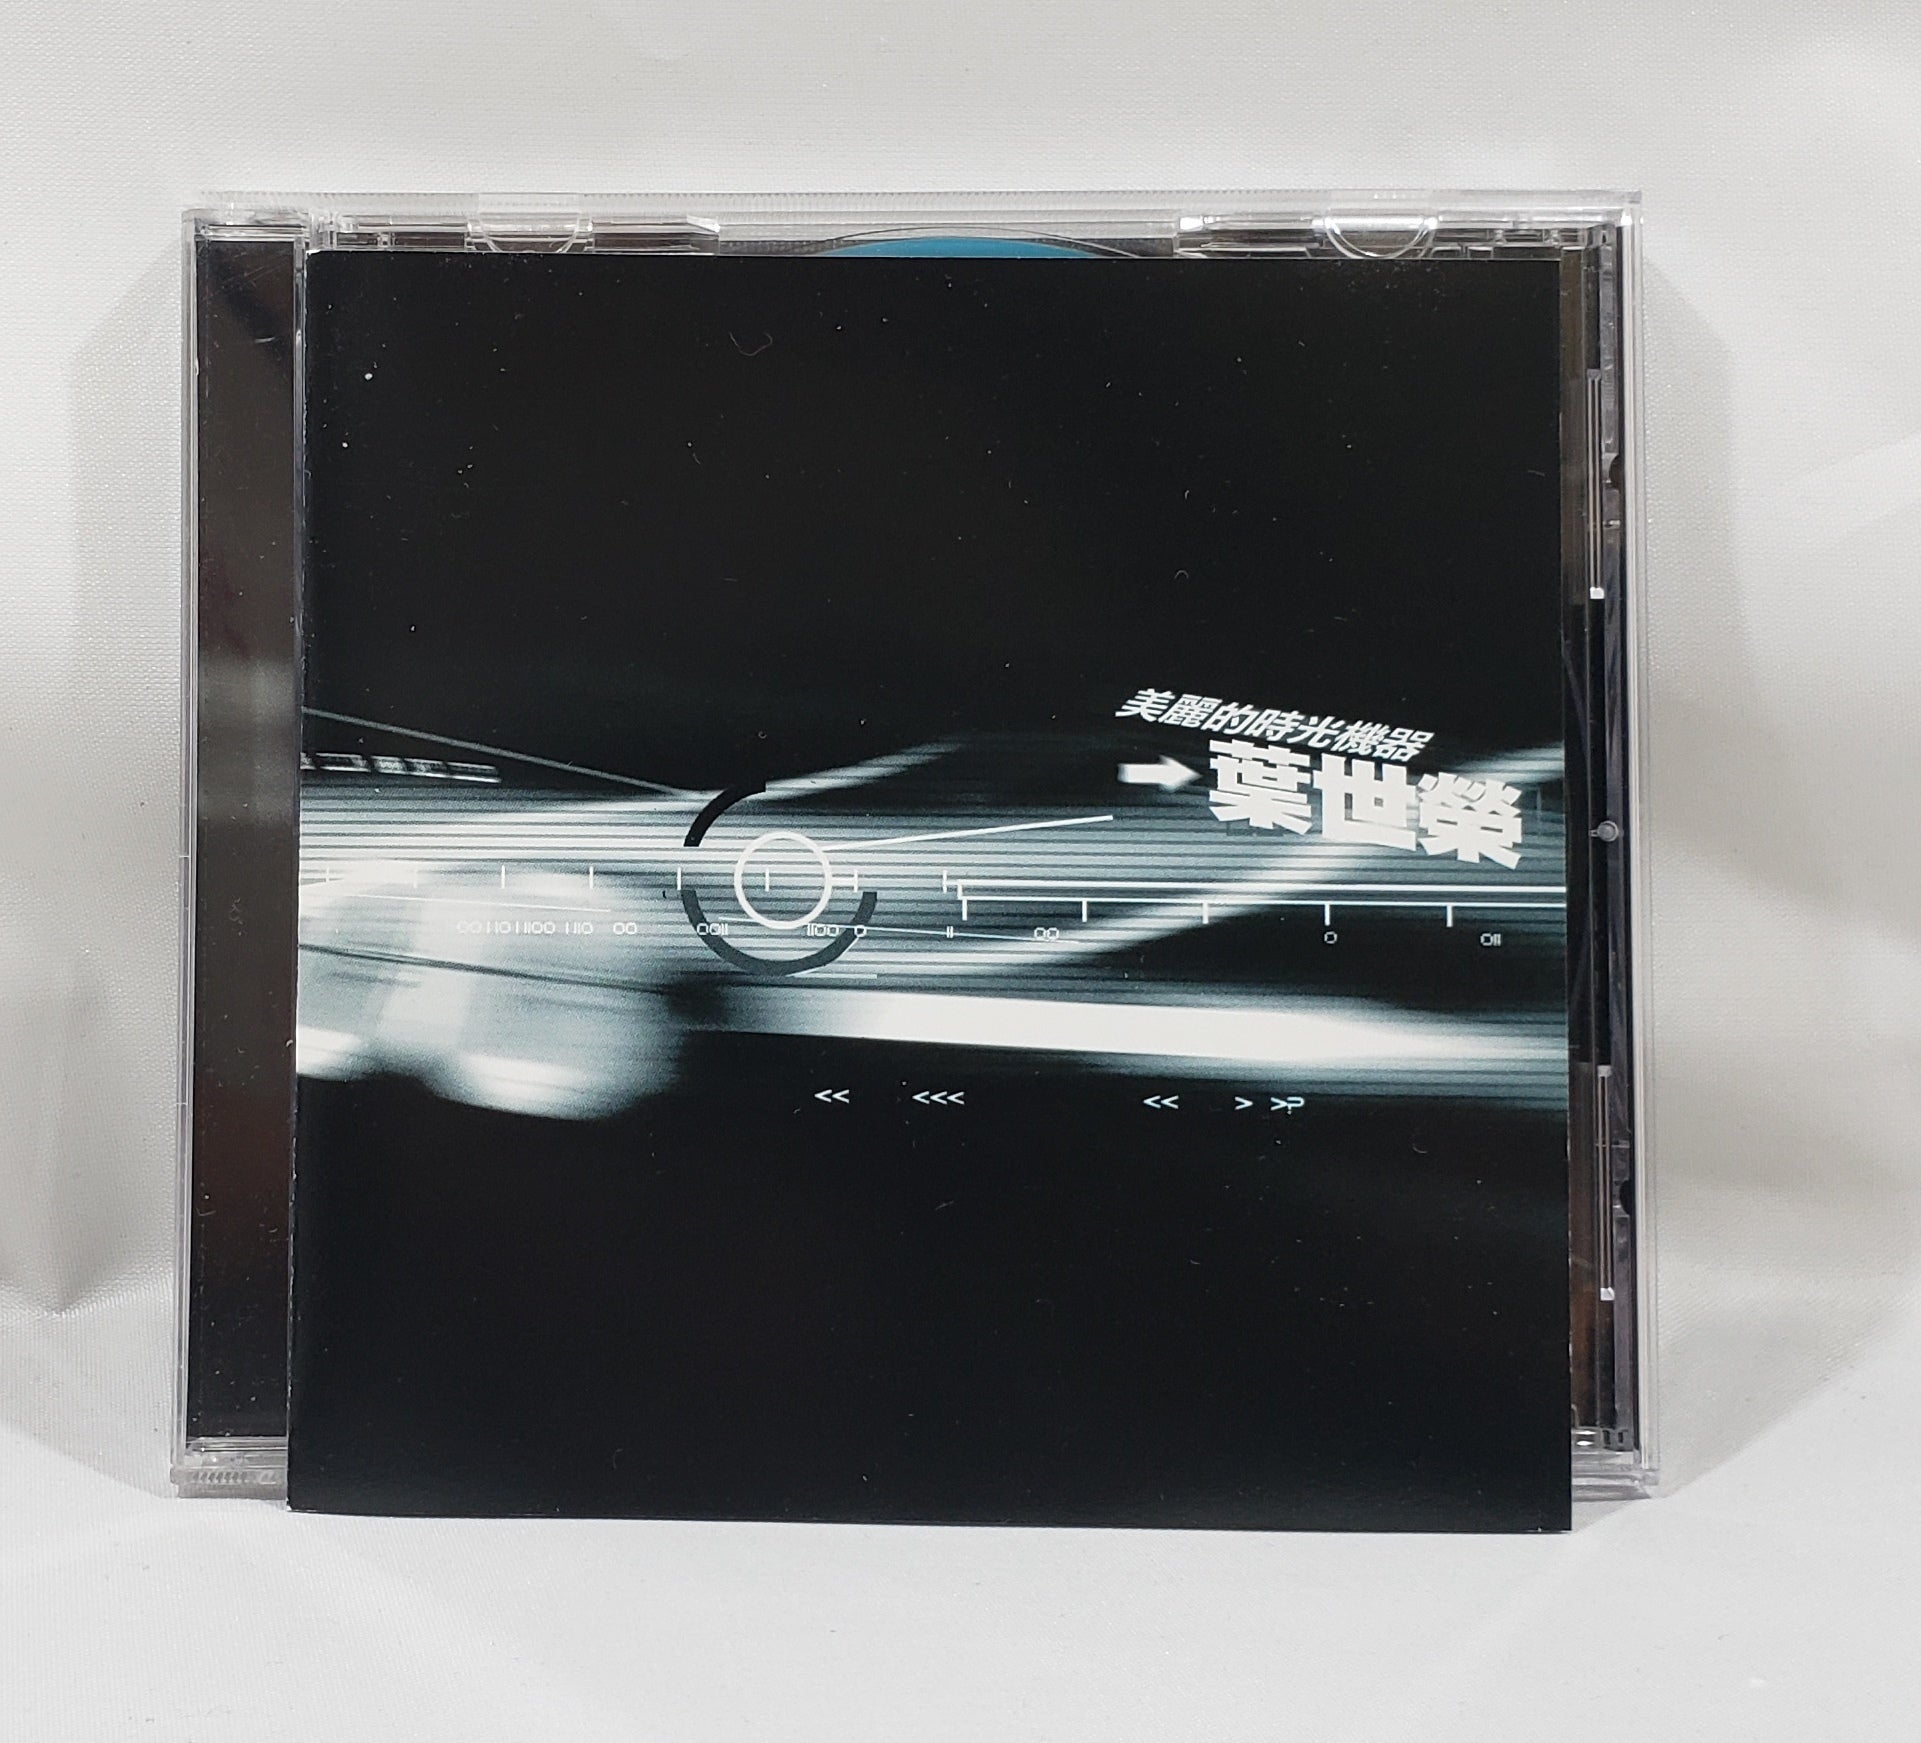 葉世榮 - 美麗的時光機器 [2001 Used CD EP]